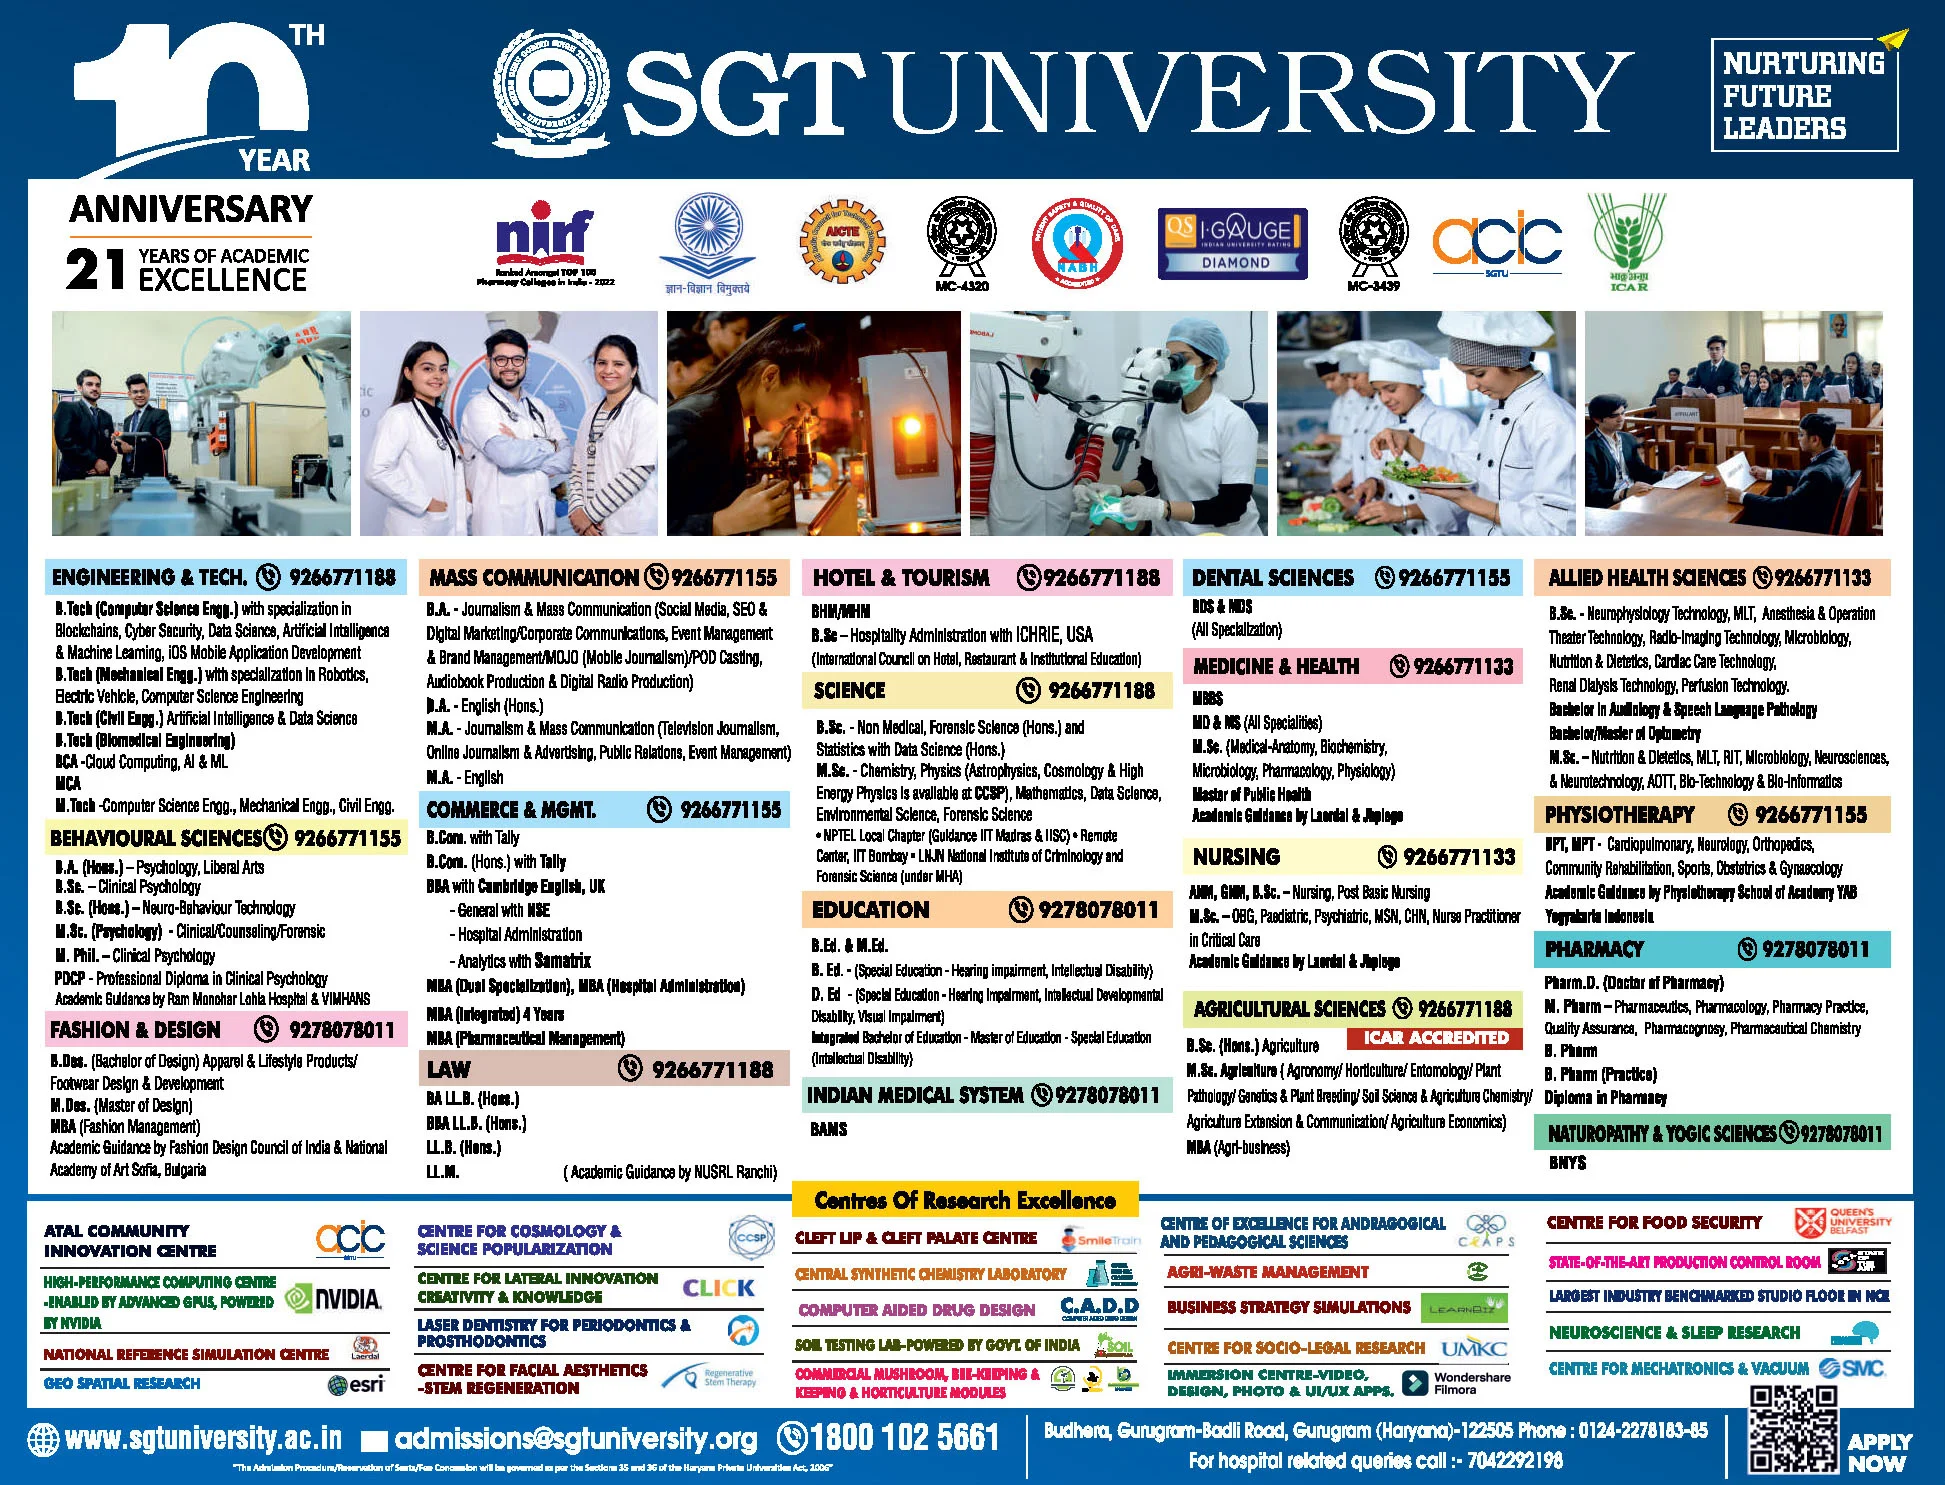 SGT University effectively captures